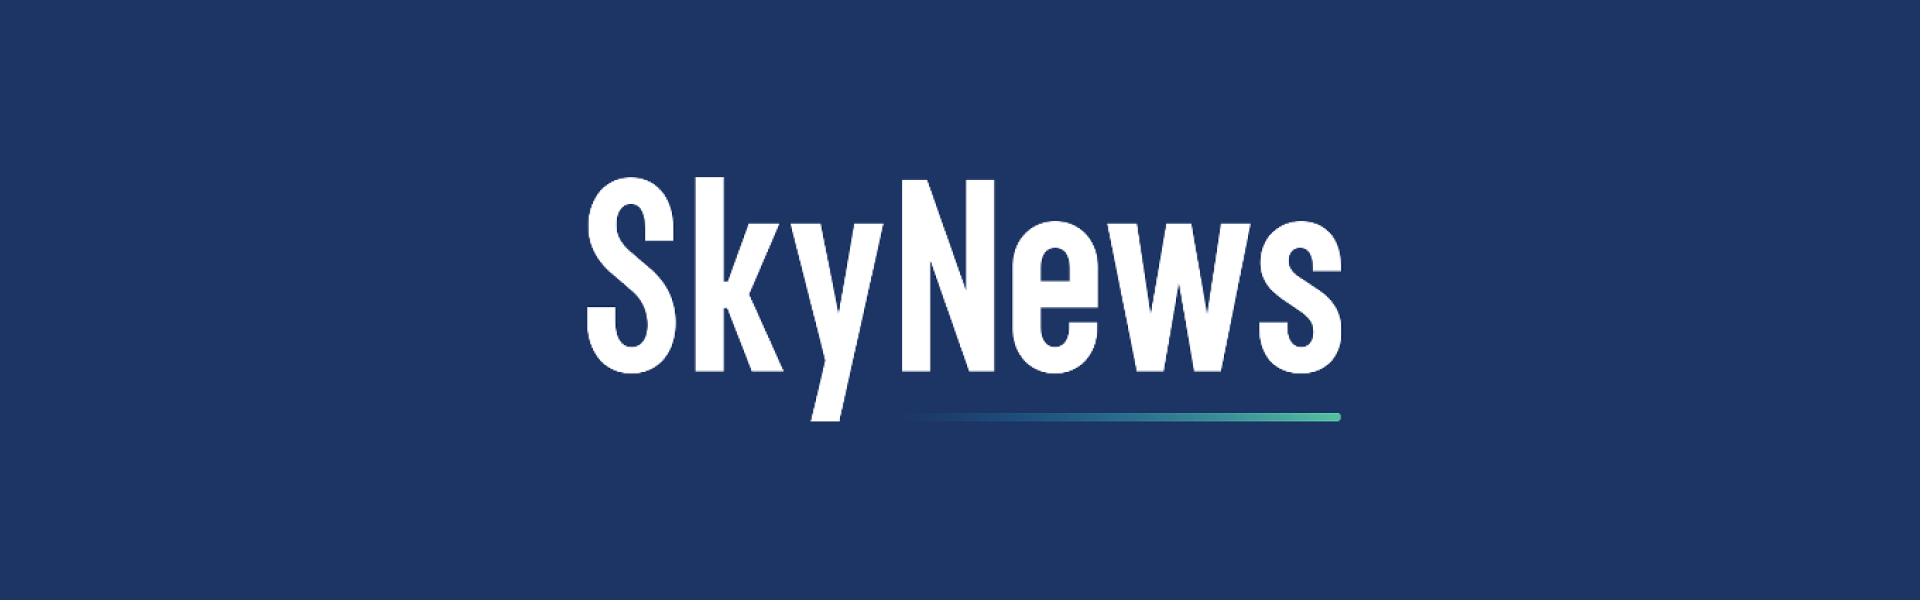 SkyNews